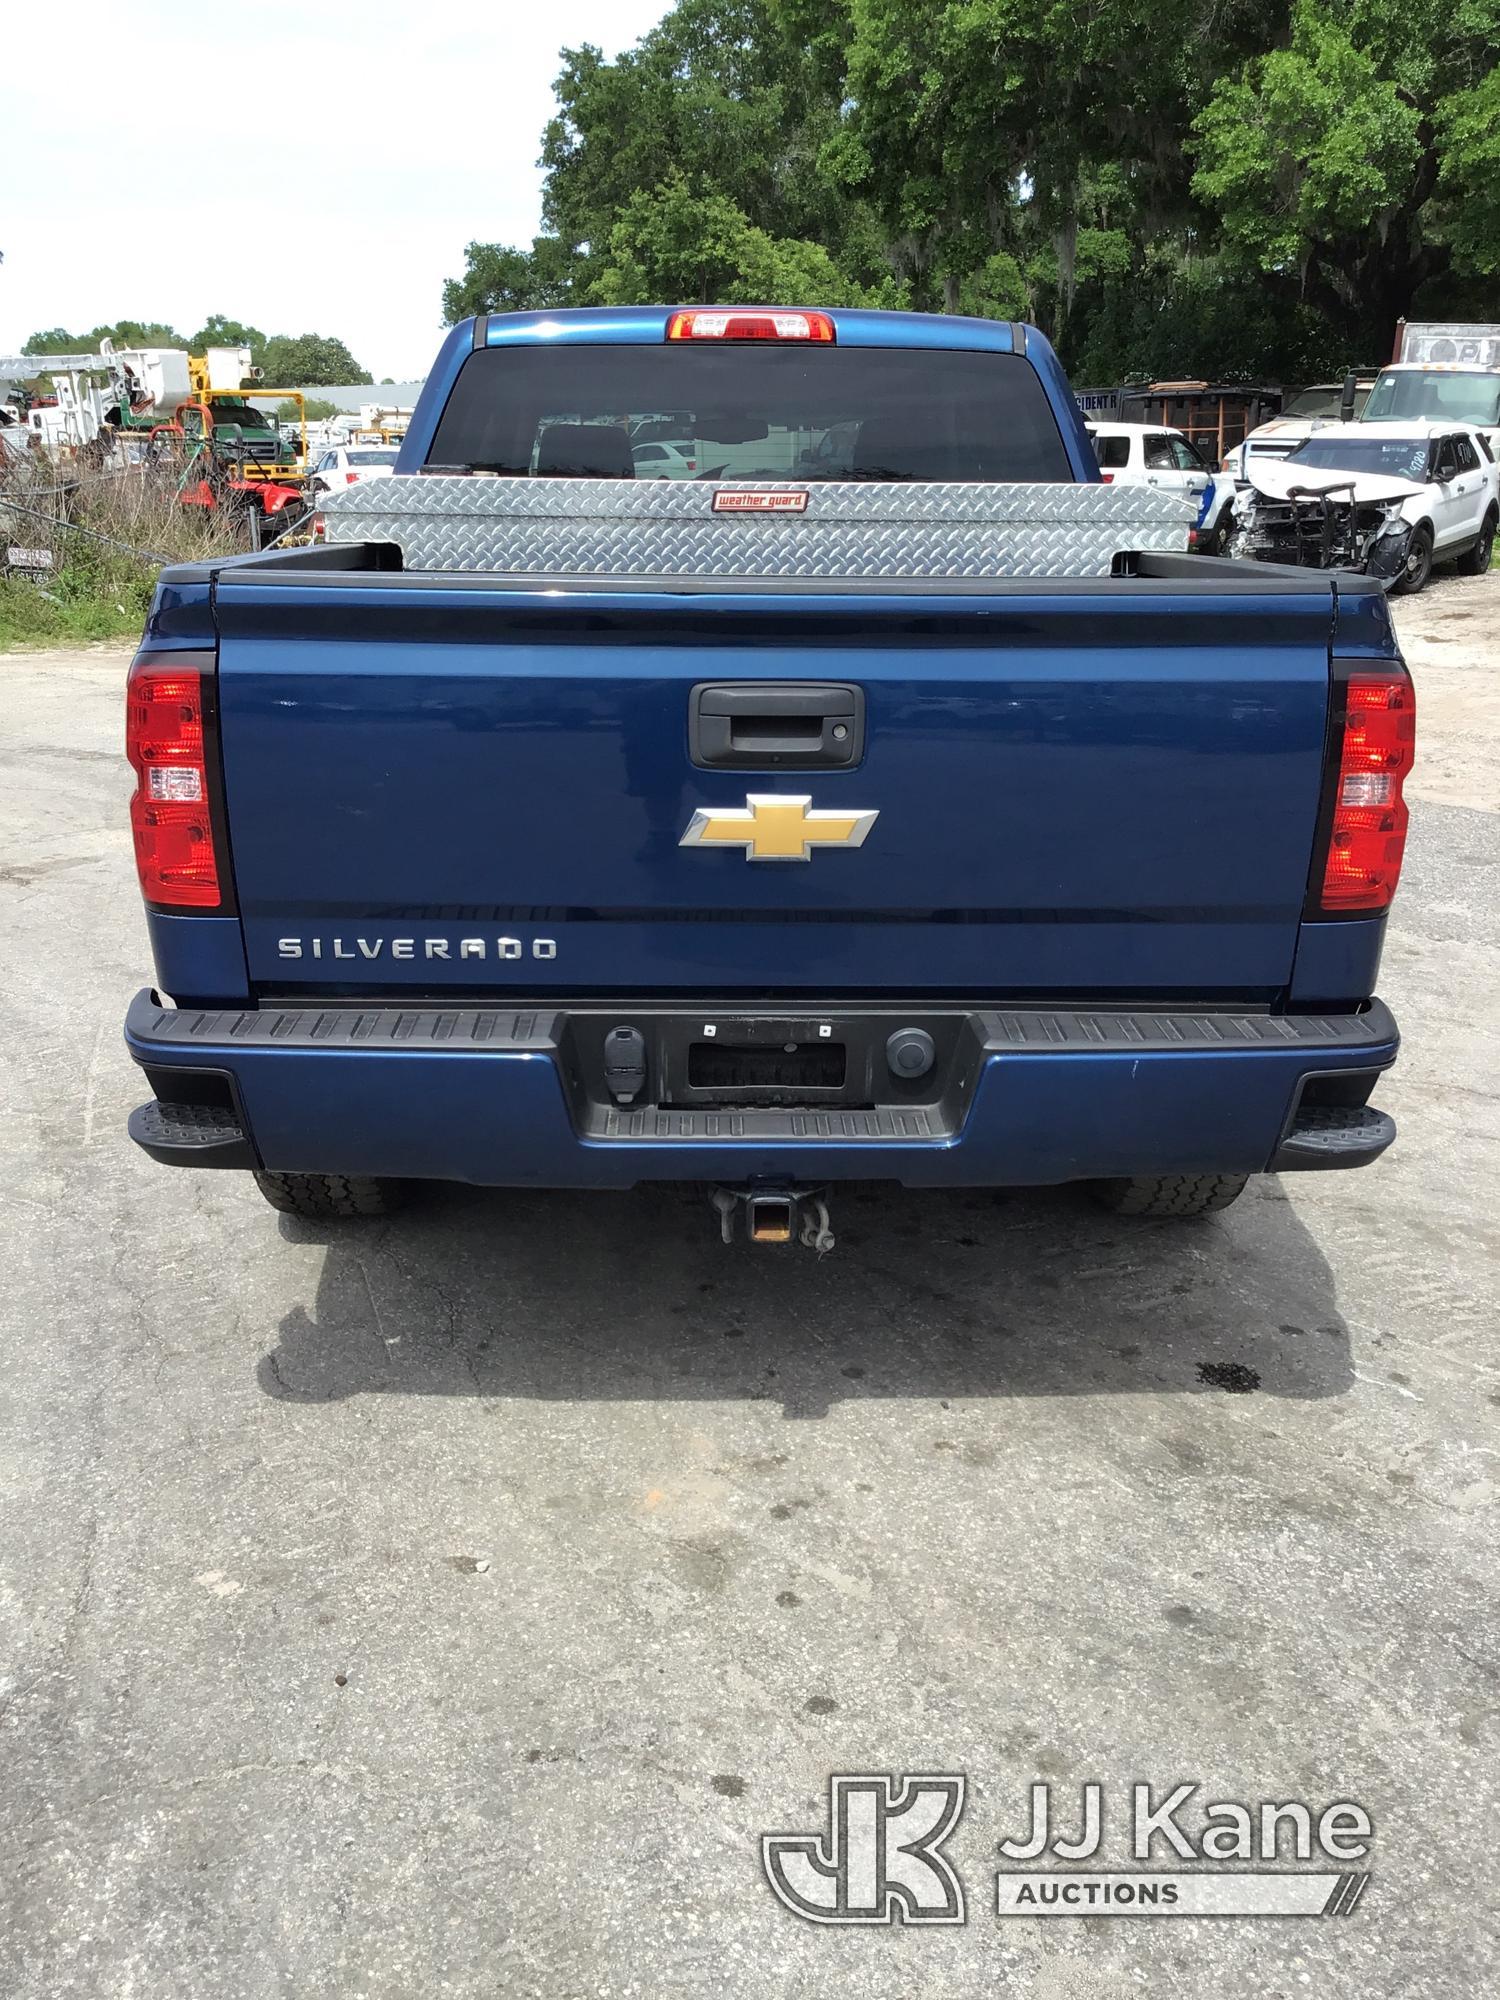 (Ocala, FL) 2017 Chevrolet Silverado 1500 4x4 Crew-Cab Pickup Truck Runs & Moves.